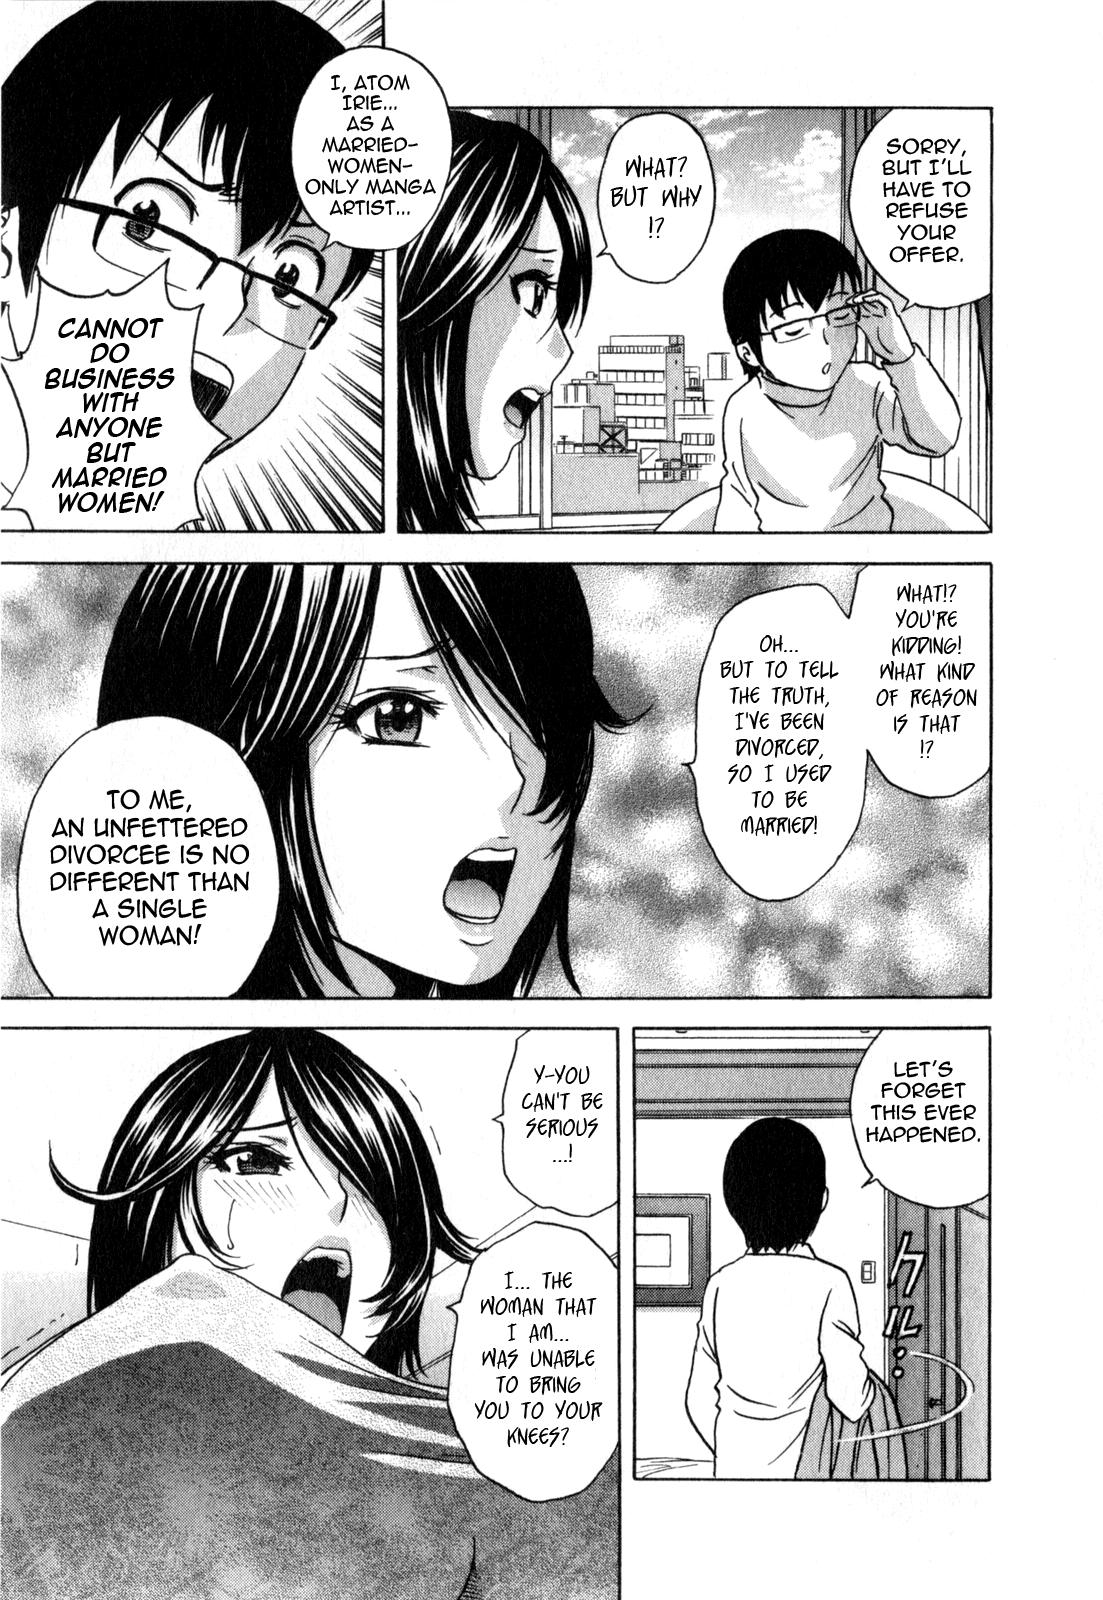 [Hidemaru] Life with Married Women Just Like a Manga 3 - Ch. 1-4 [English] {Tadanohito} 52